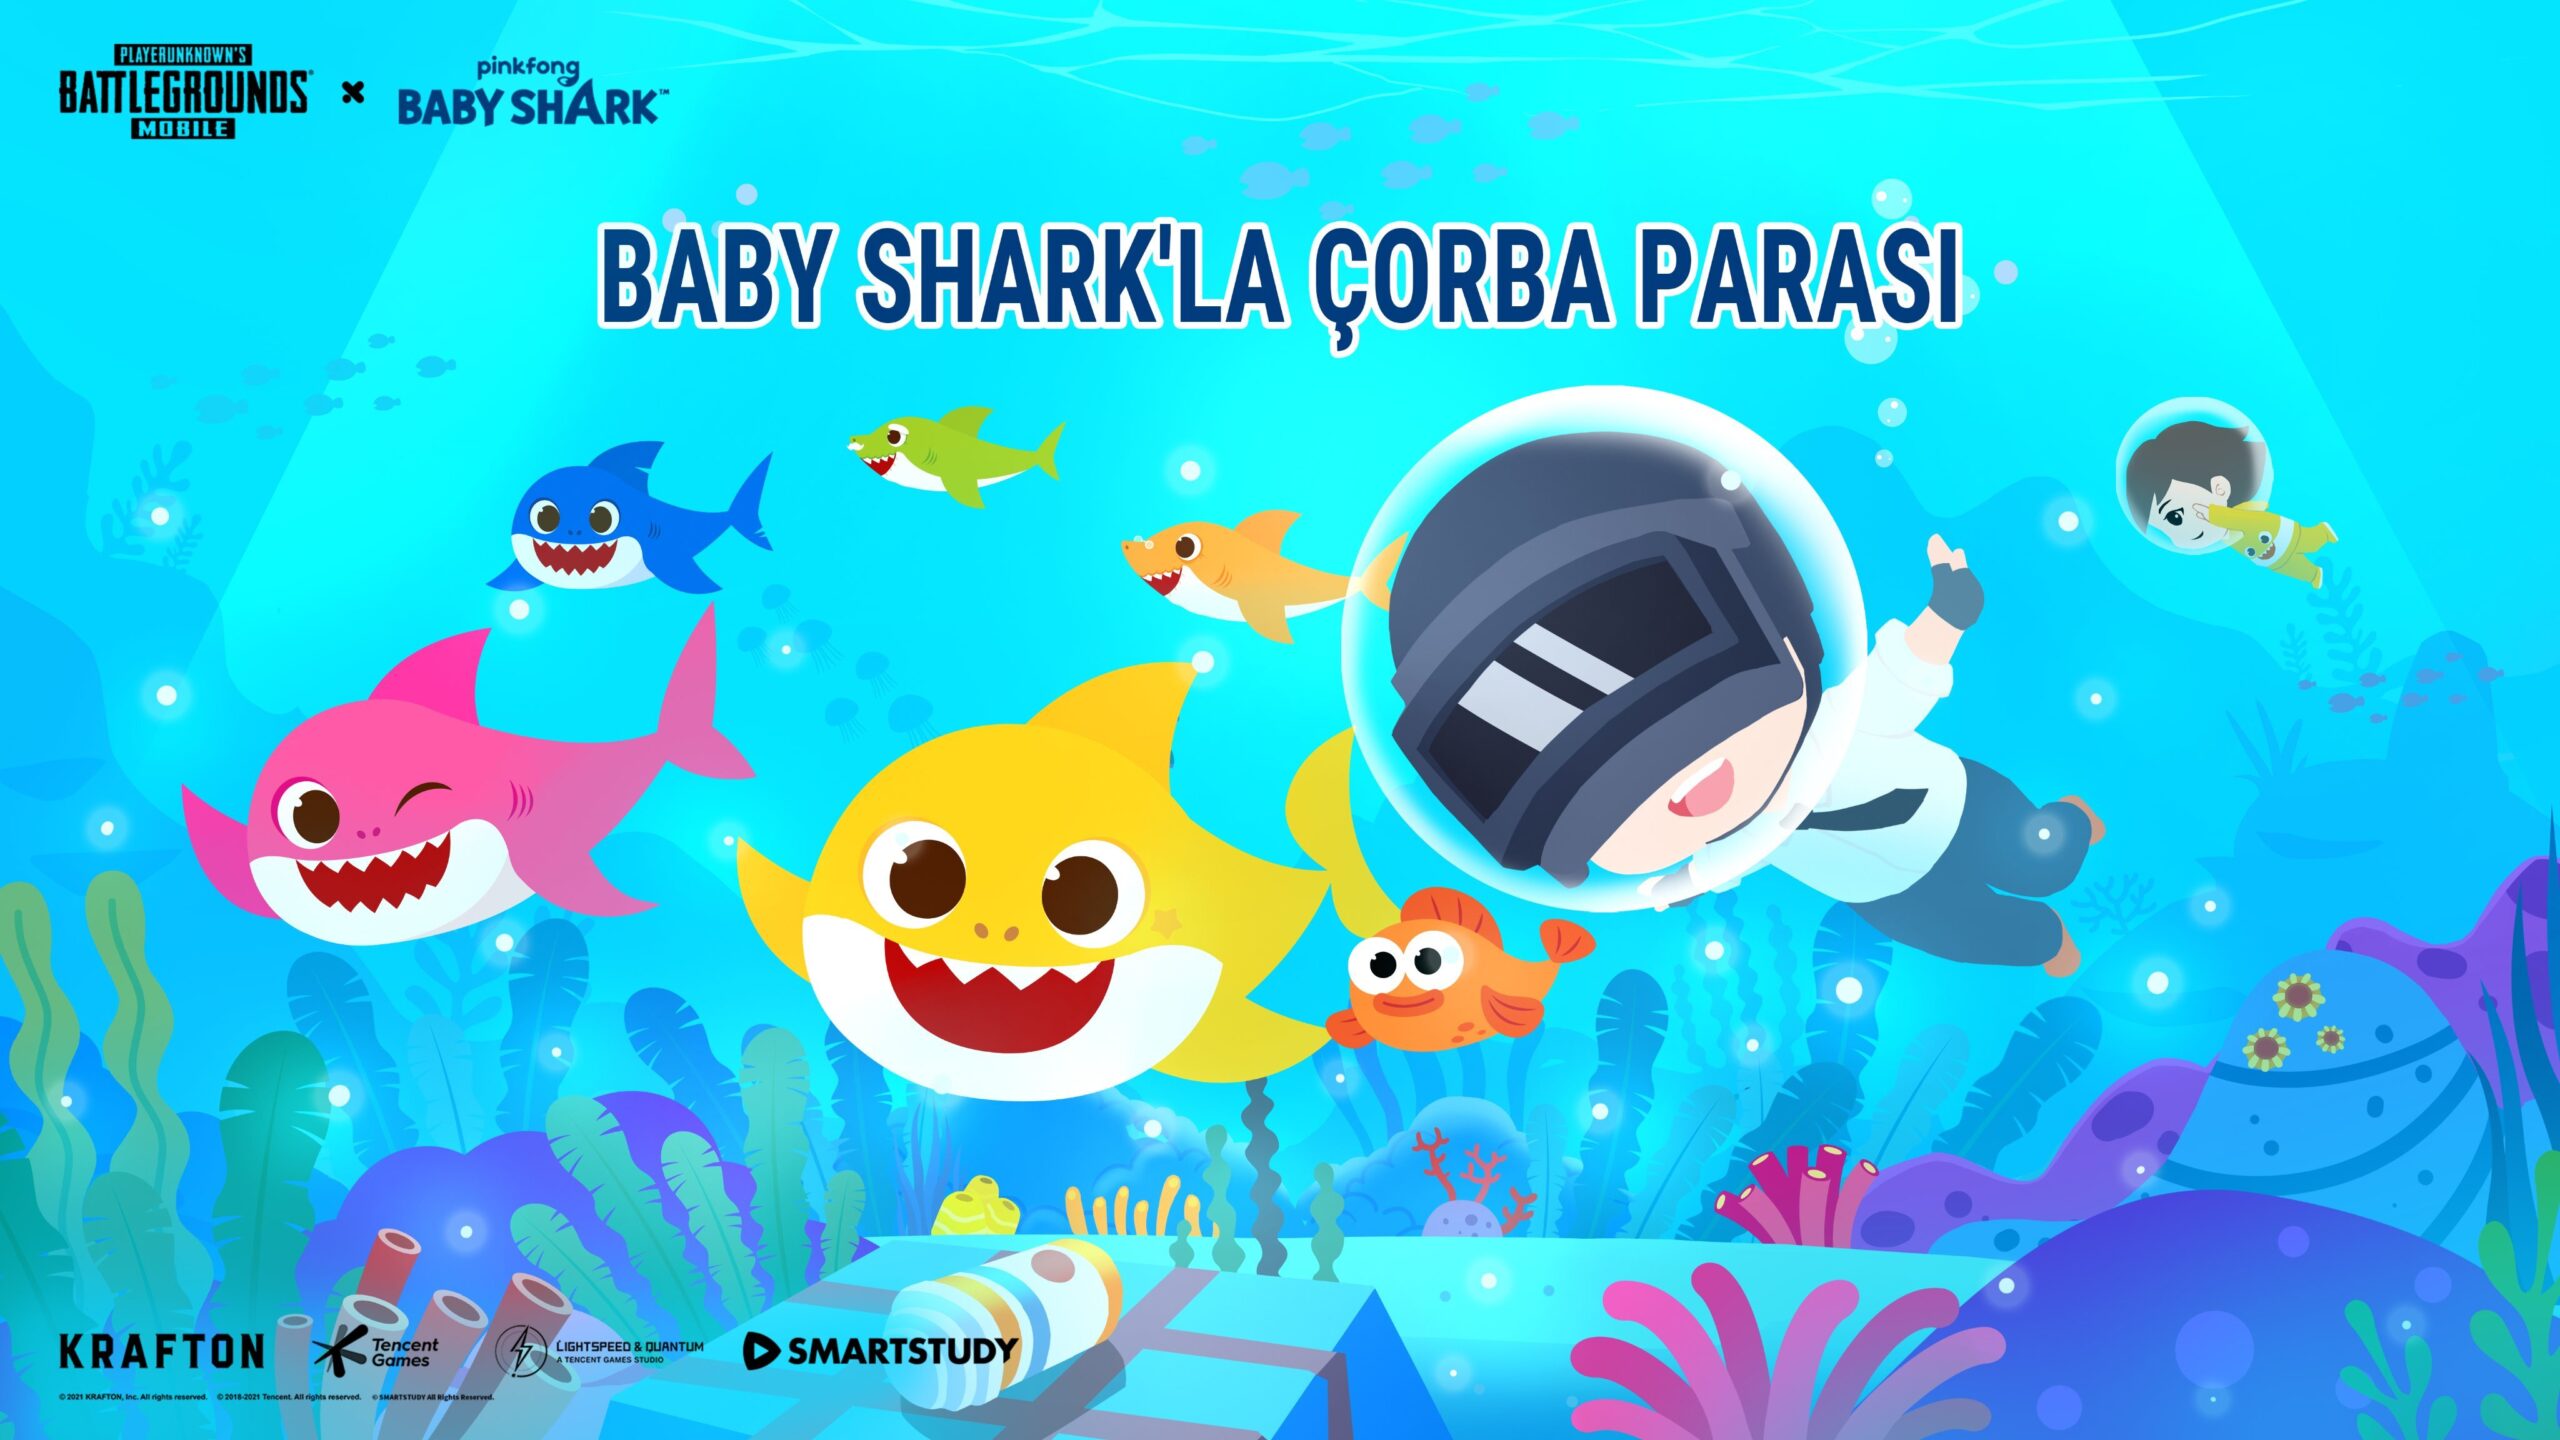 PUBG Mobile x Baby Shark